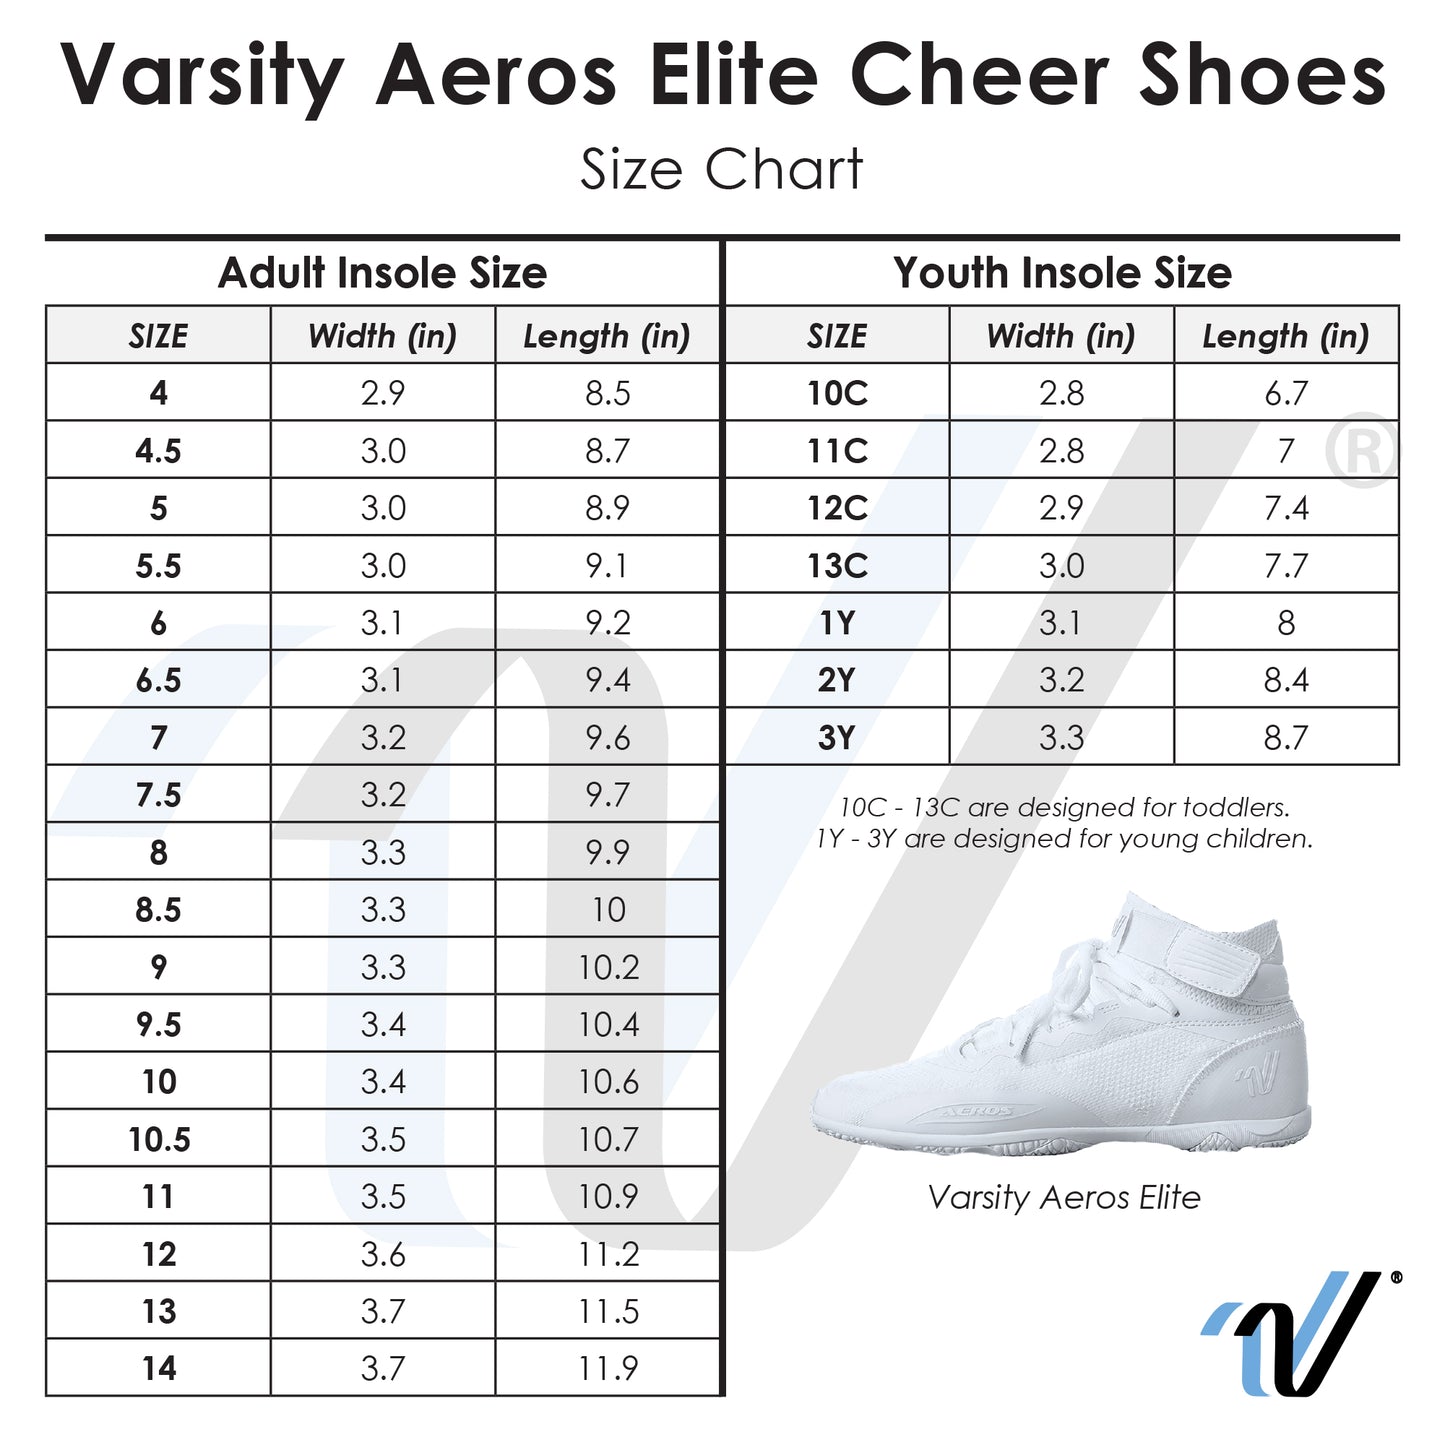 Varsity Aeros Elite Cheer Shoes